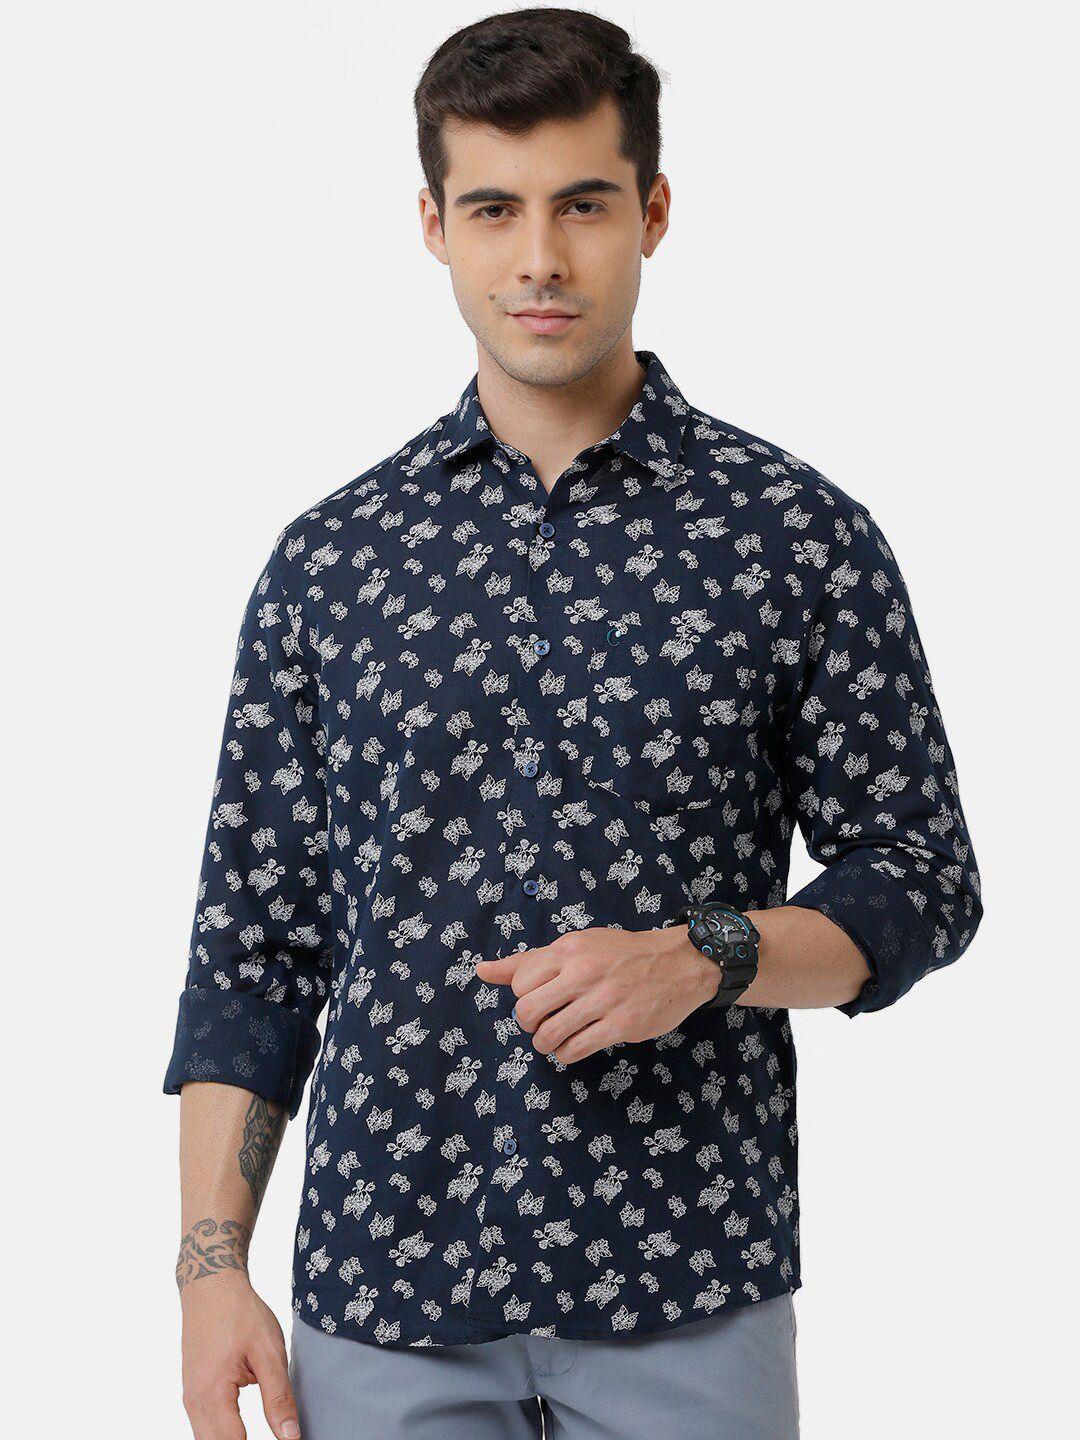 cavallo-by-linen-club-men-blue-floral-printed-casual-shirt